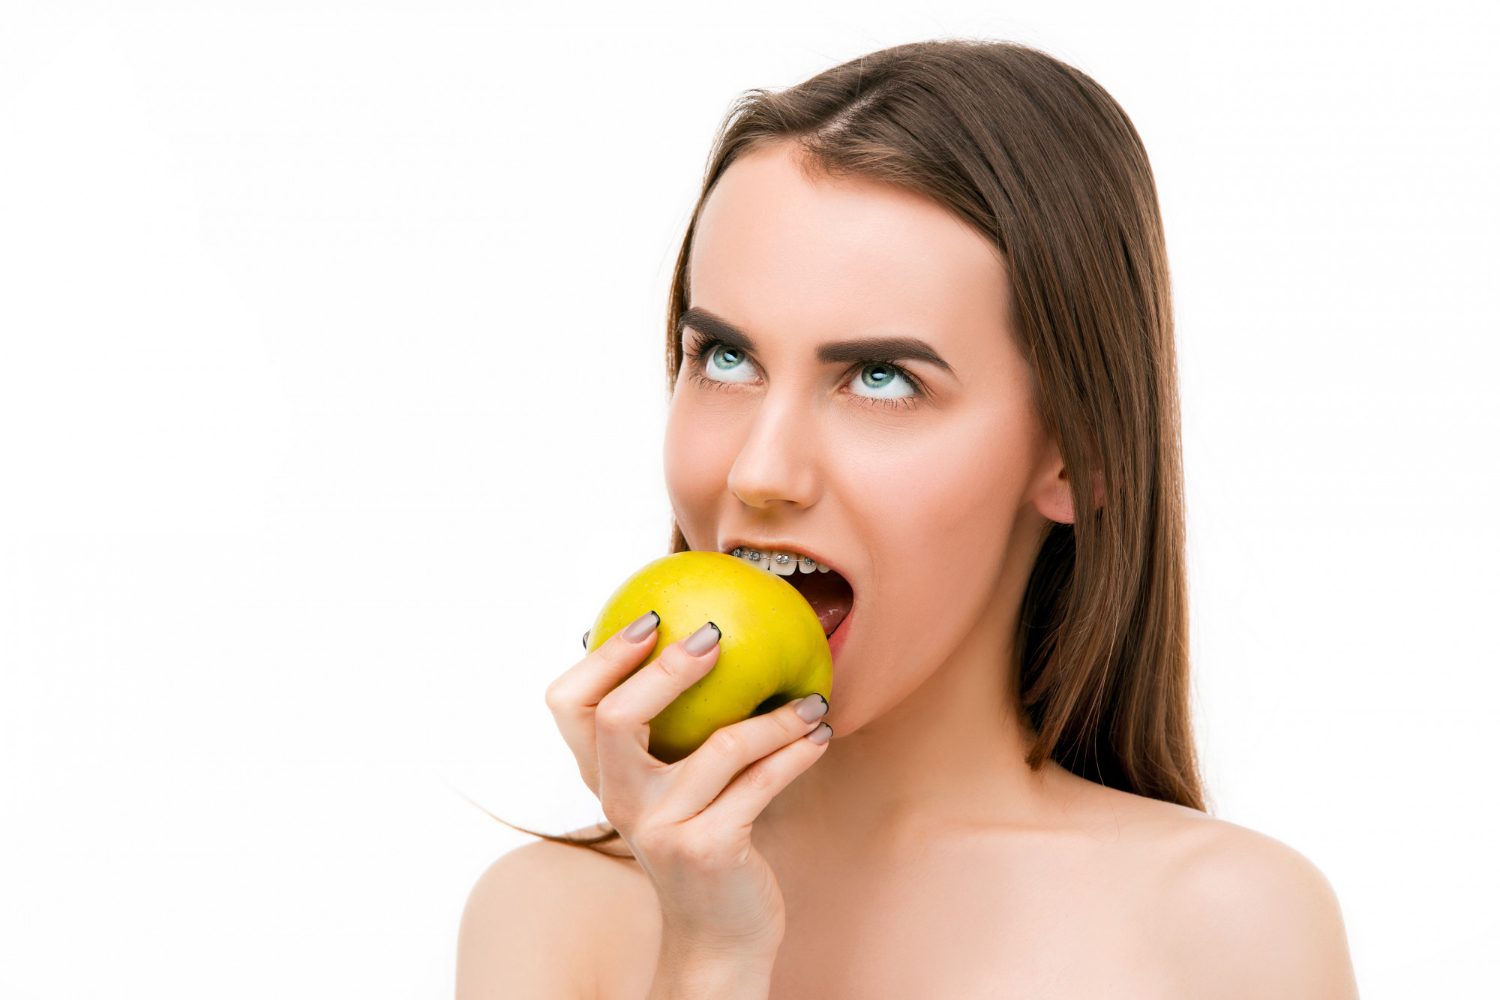 beautiful young woman tabitha with braces on teeth biting apple